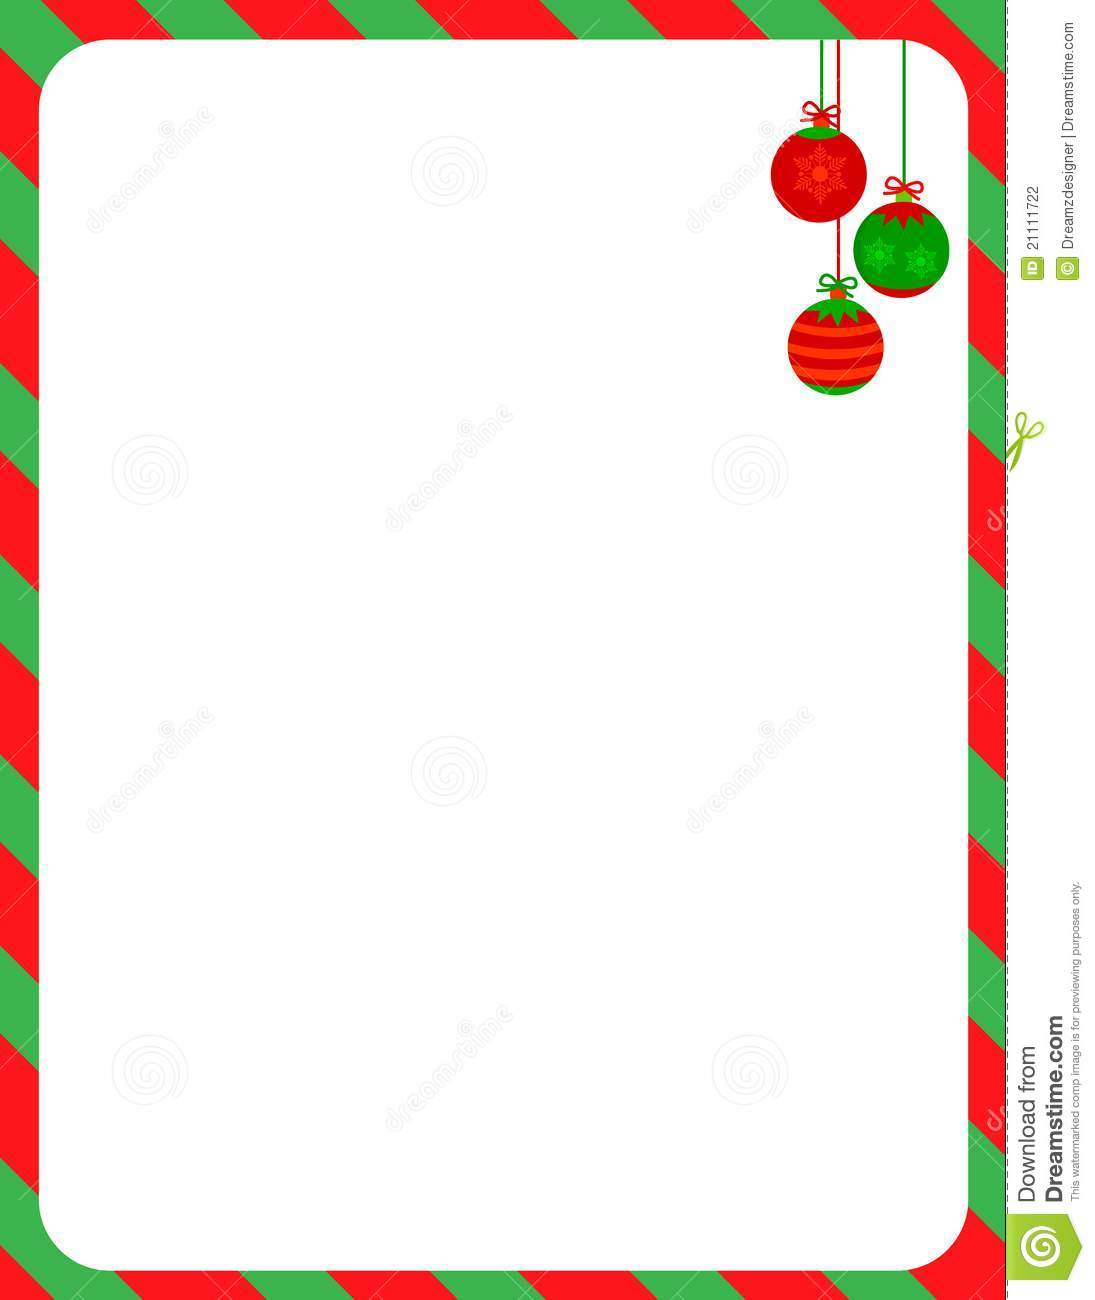 Christmas border candy cane illustration megapixl jpg